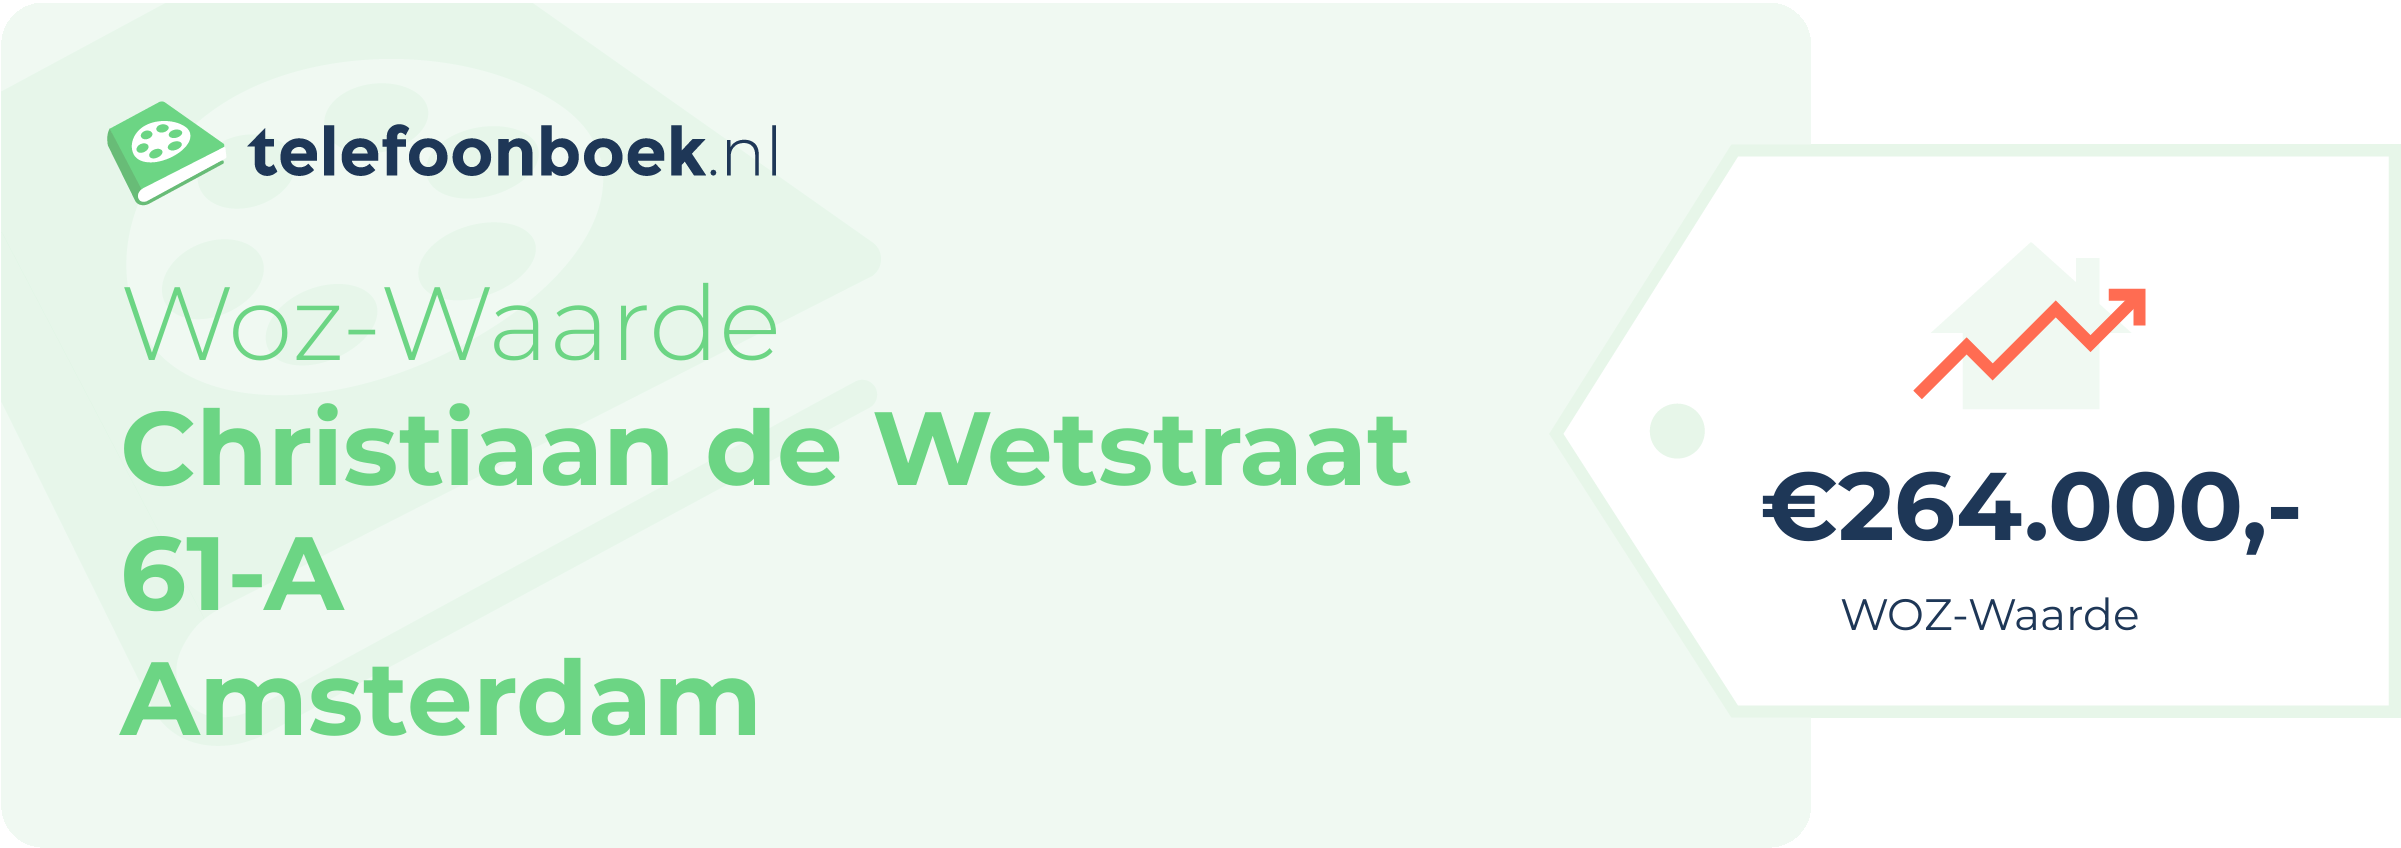 WOZ-waarde Christiaan De Wetstraat 61-A Amsterdam